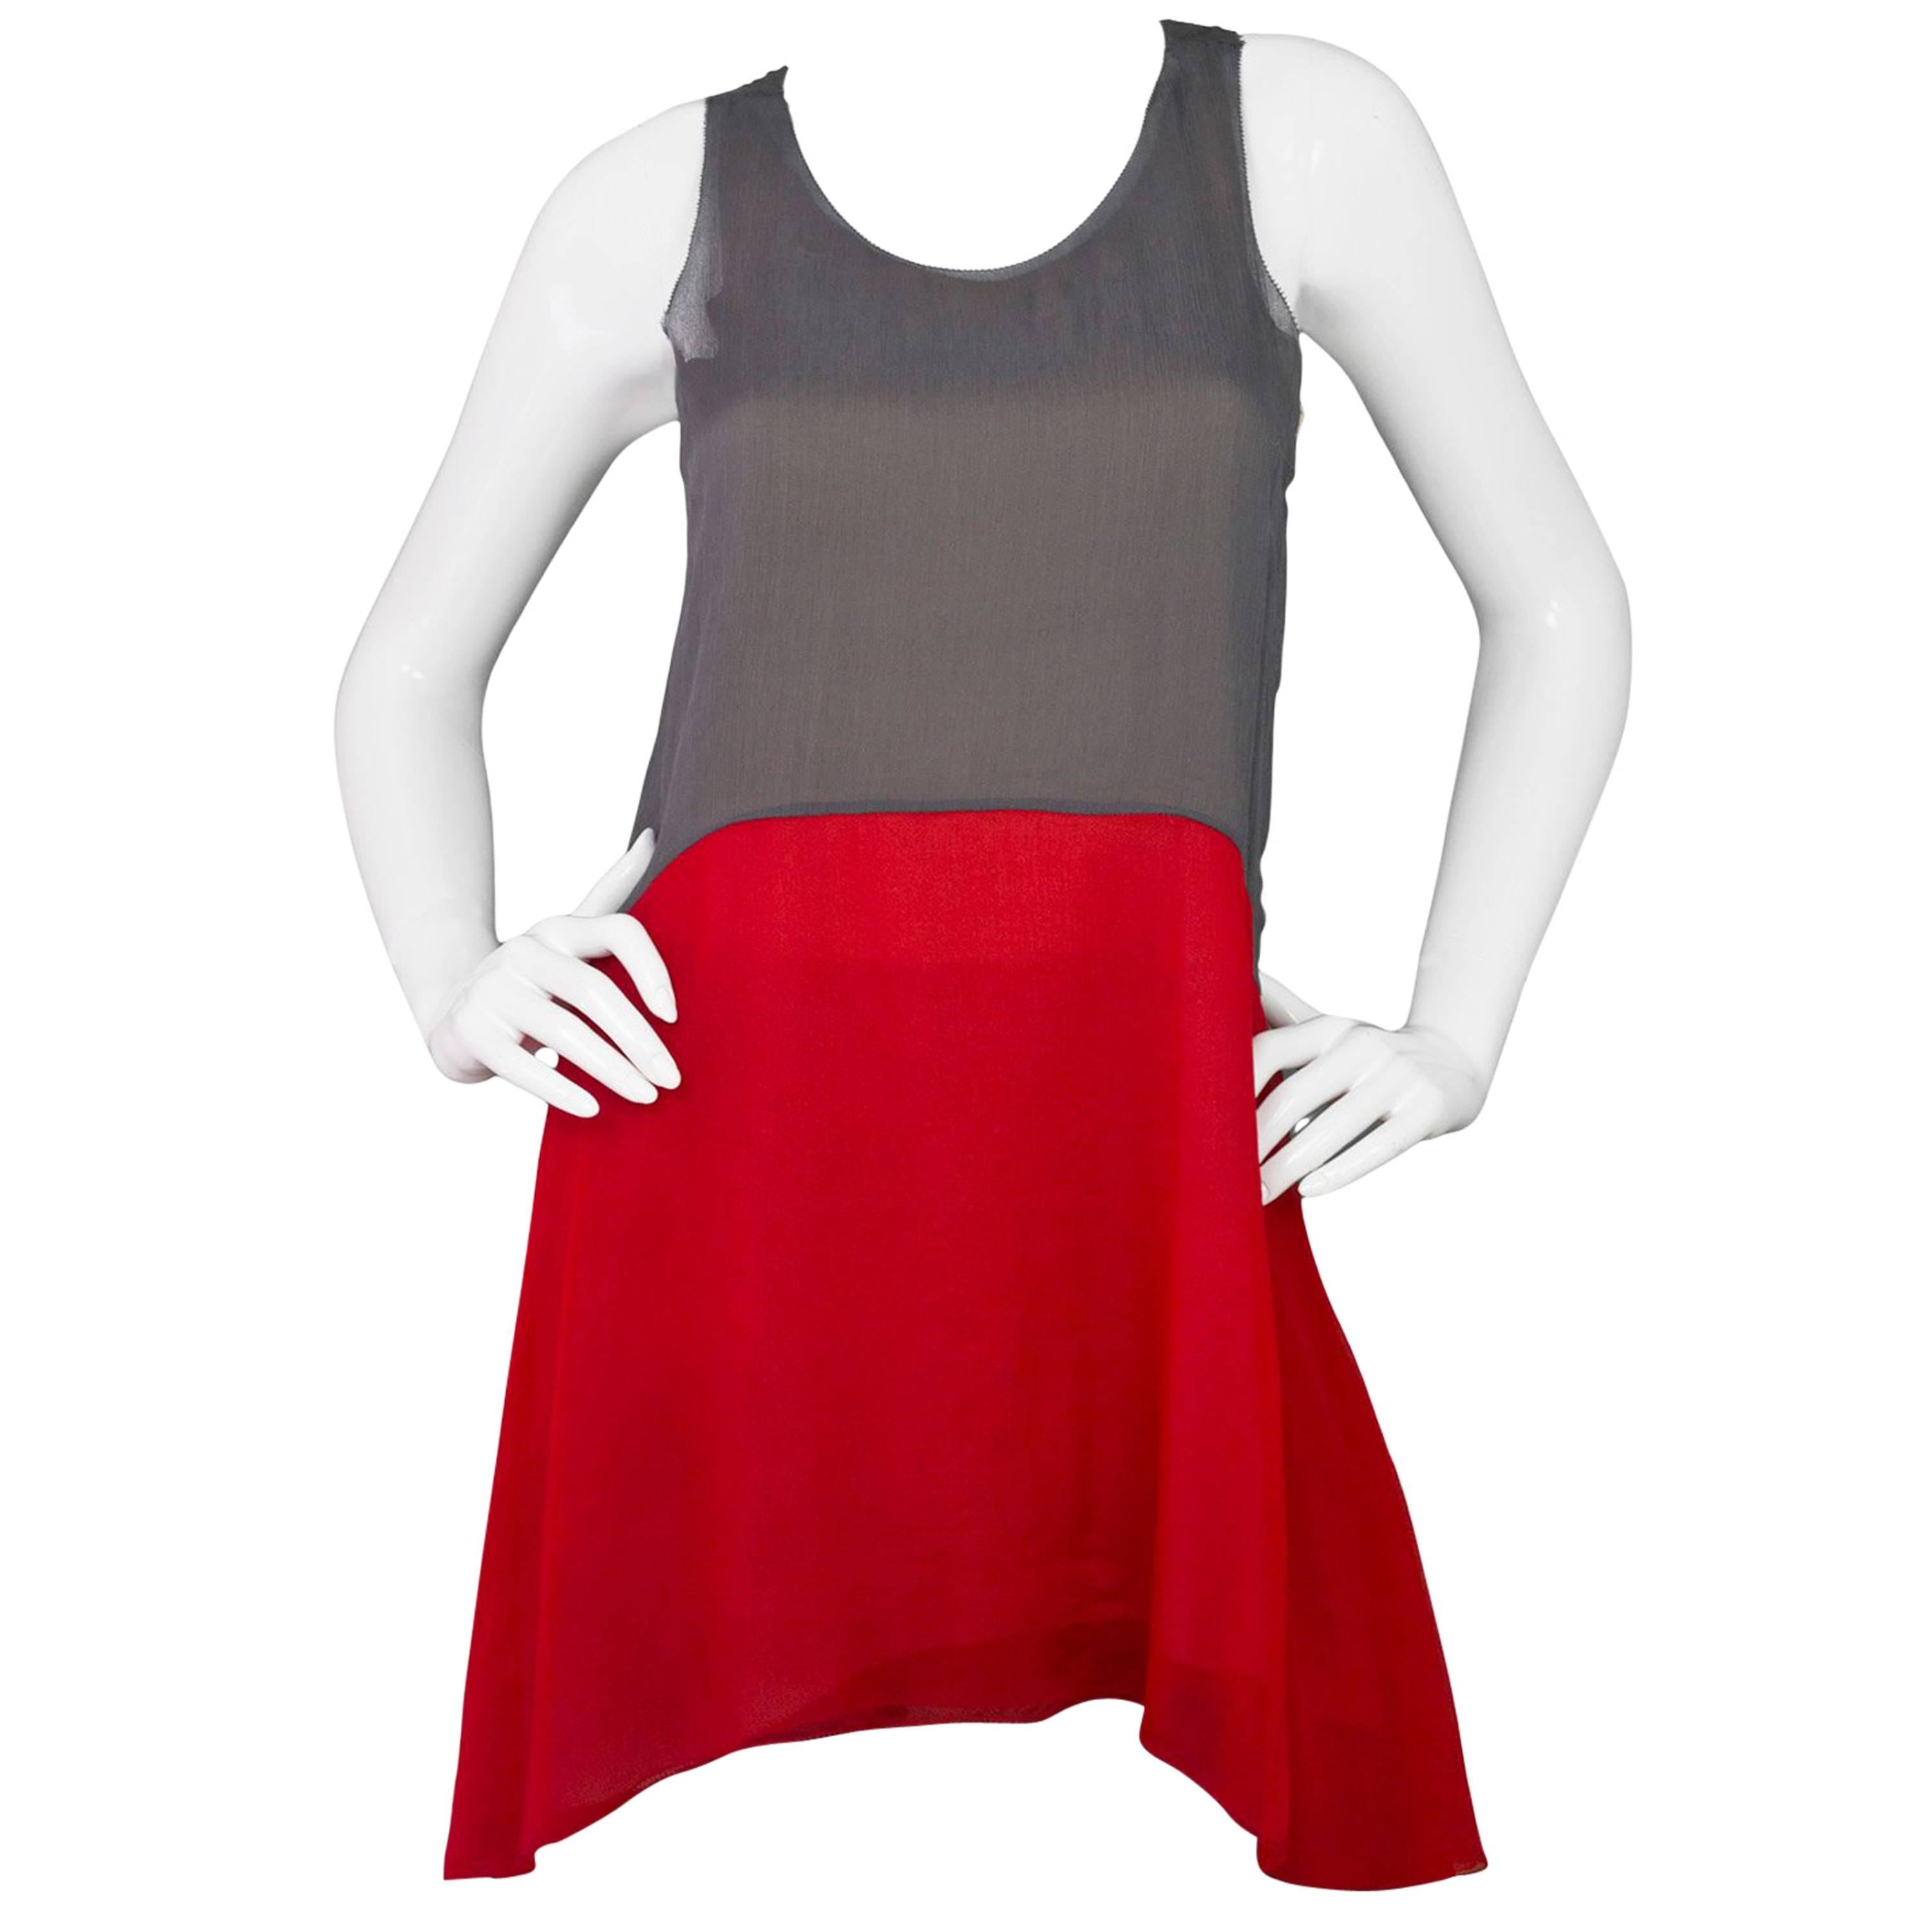 Vera Wang Grey & Red Color Block Sleeveless Tunic Top sz US4